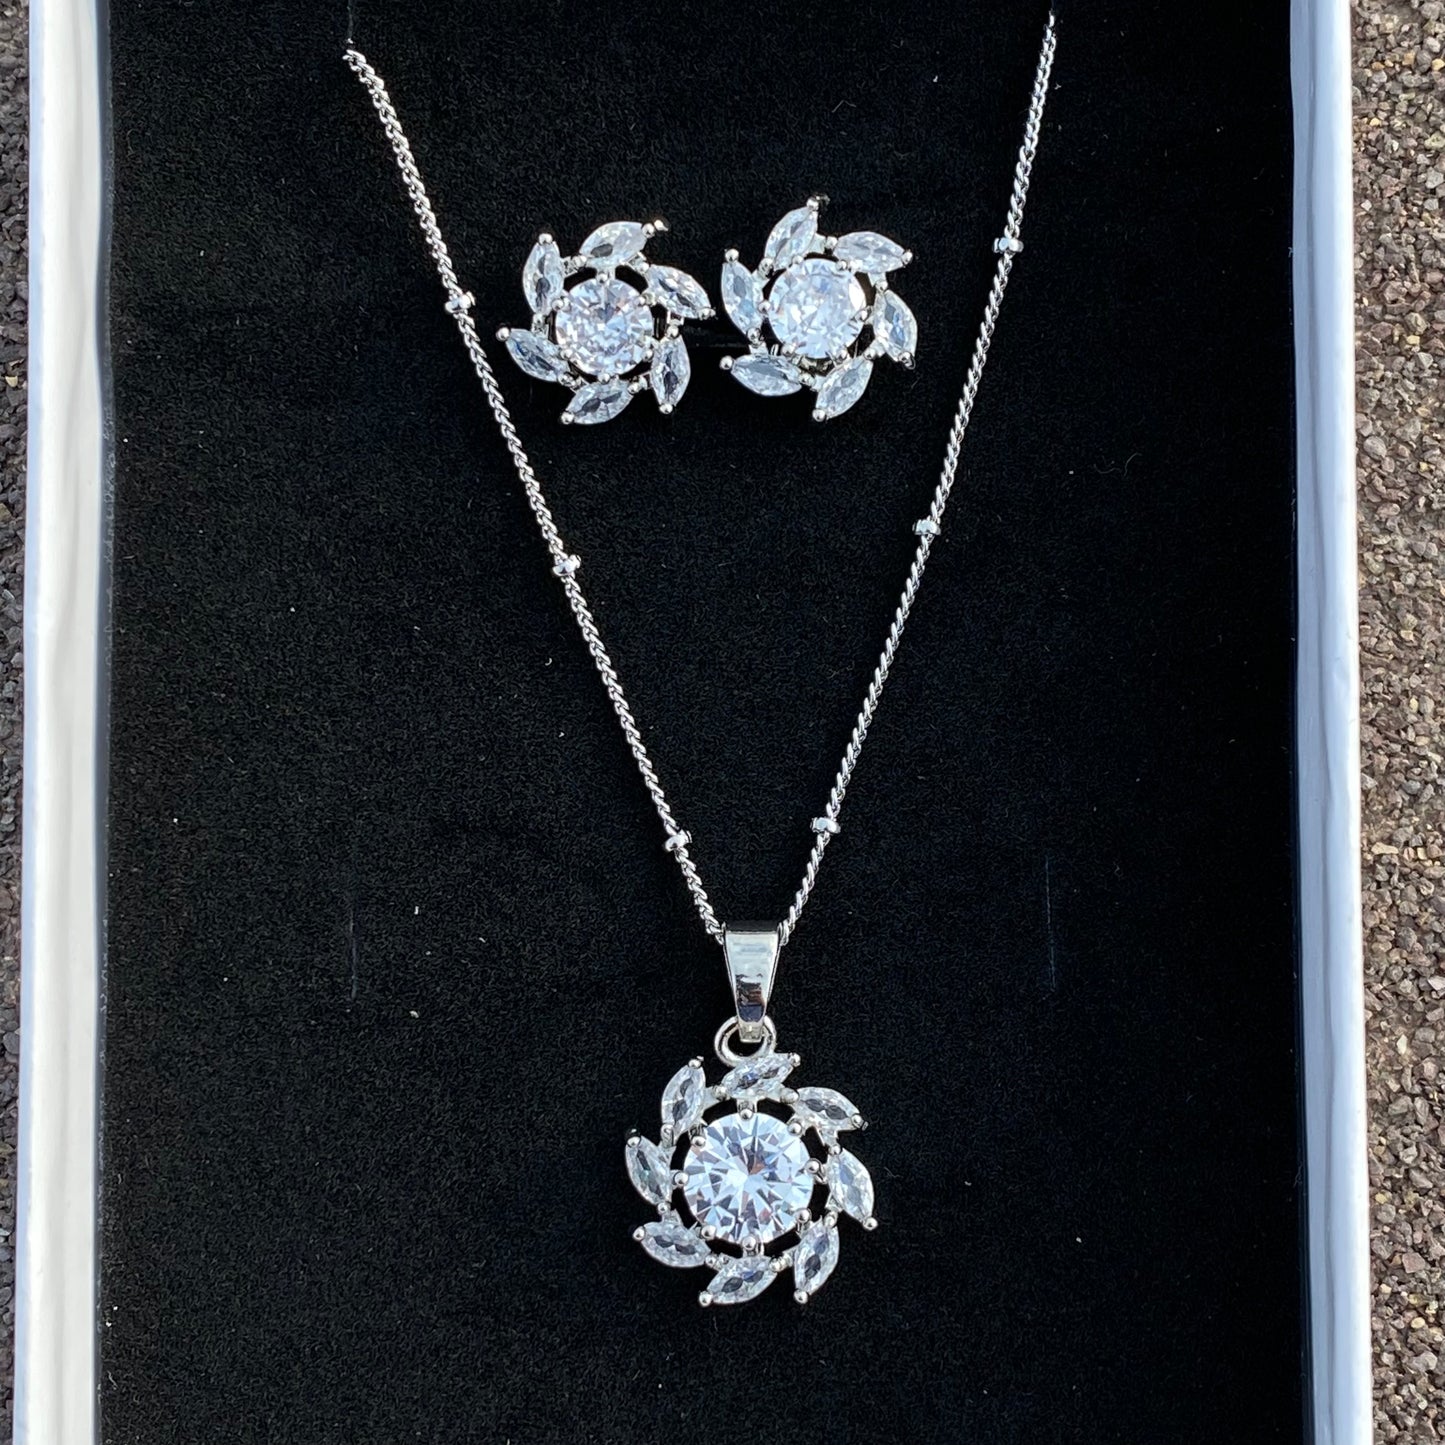 Valeria necklace set